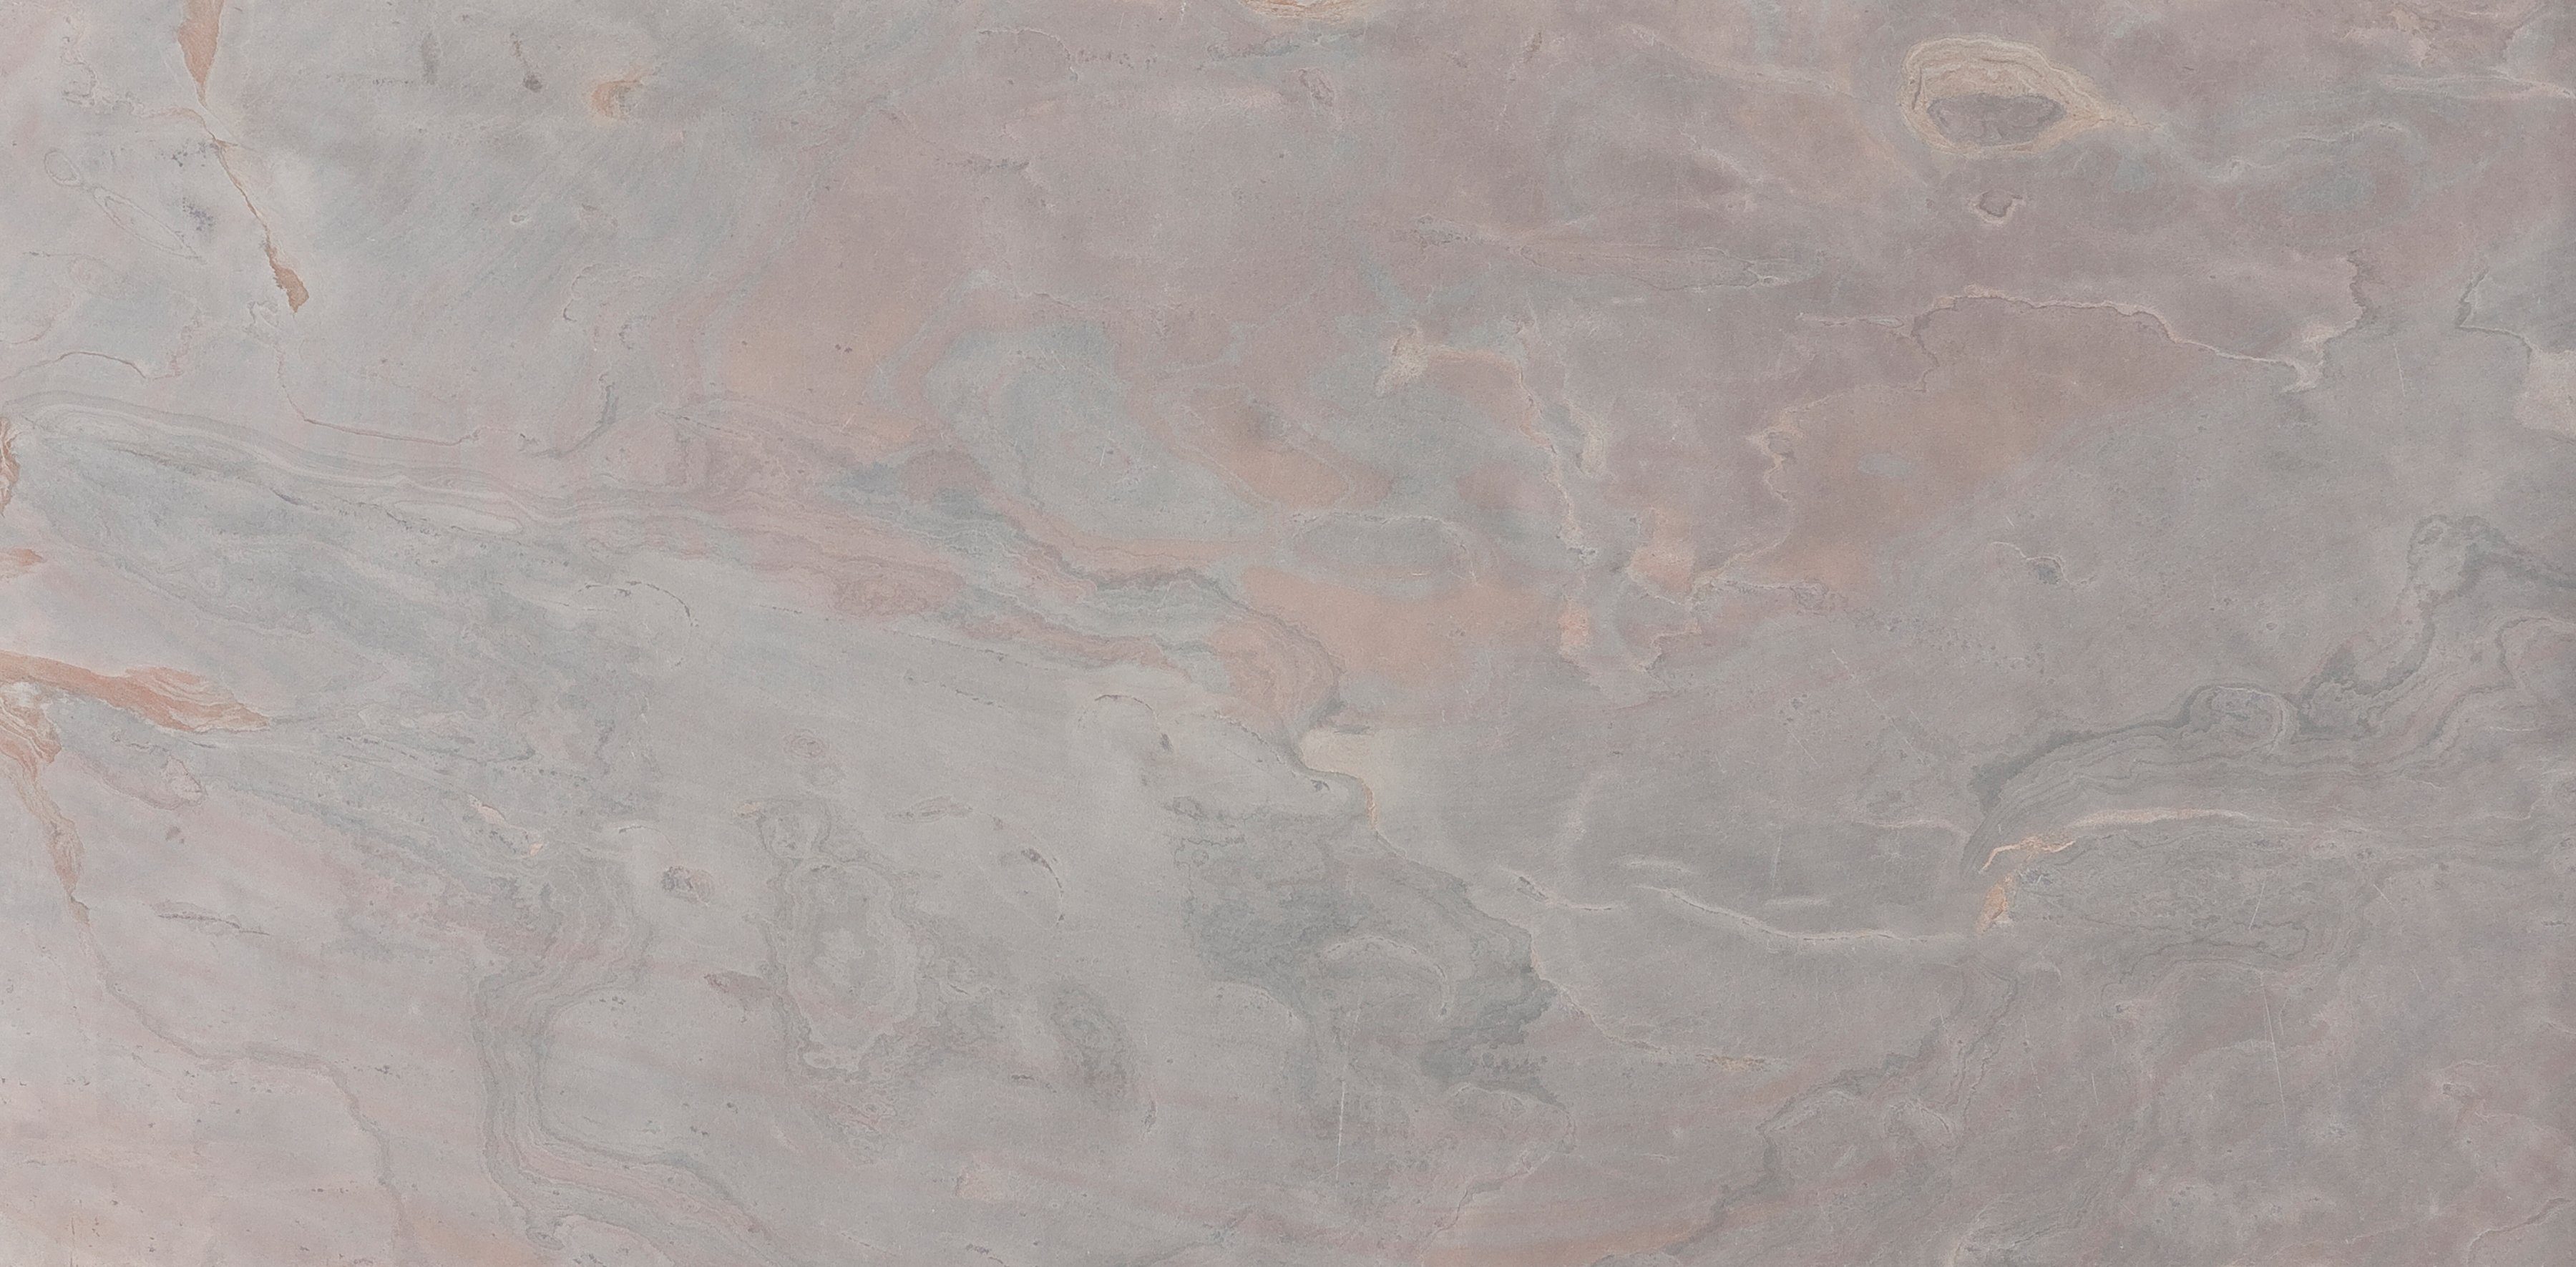 Slate Lite Wandpaneel Molto Rosa, BxL: 120x240 cm, 2,88 qm, (1-tlg) aus Echtstein